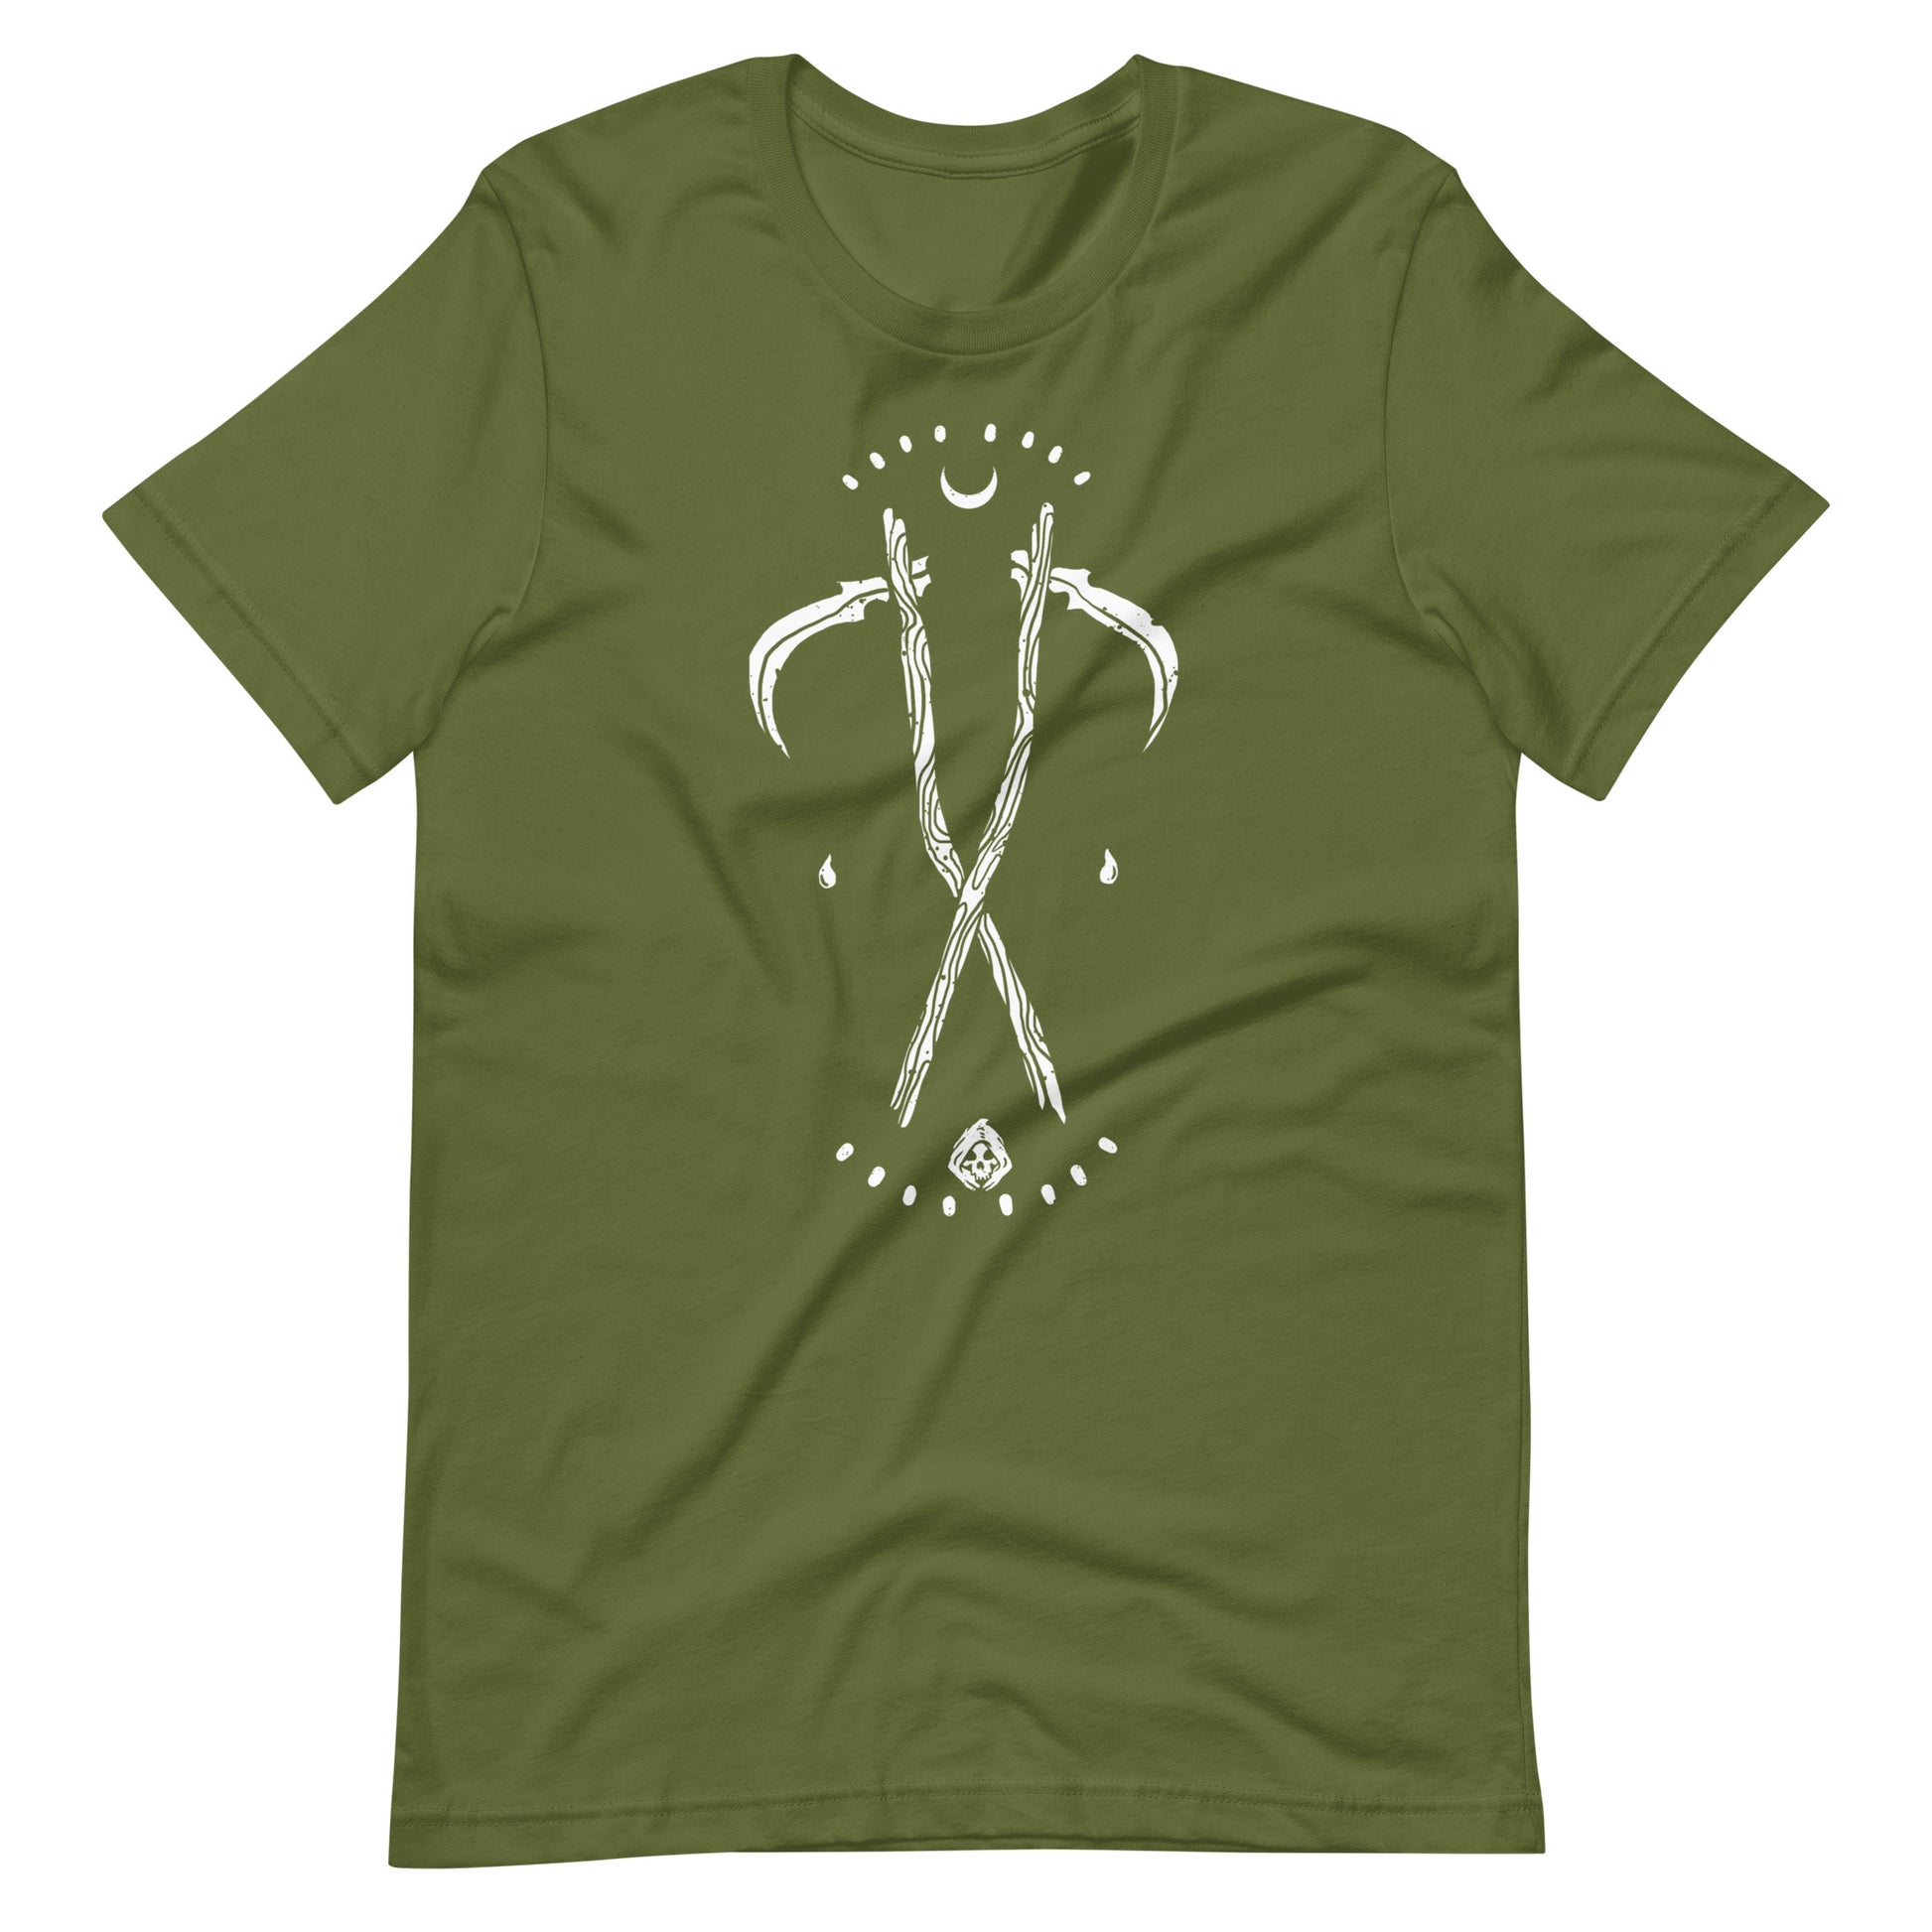 Grim - Men's t-shirt - Olive Front